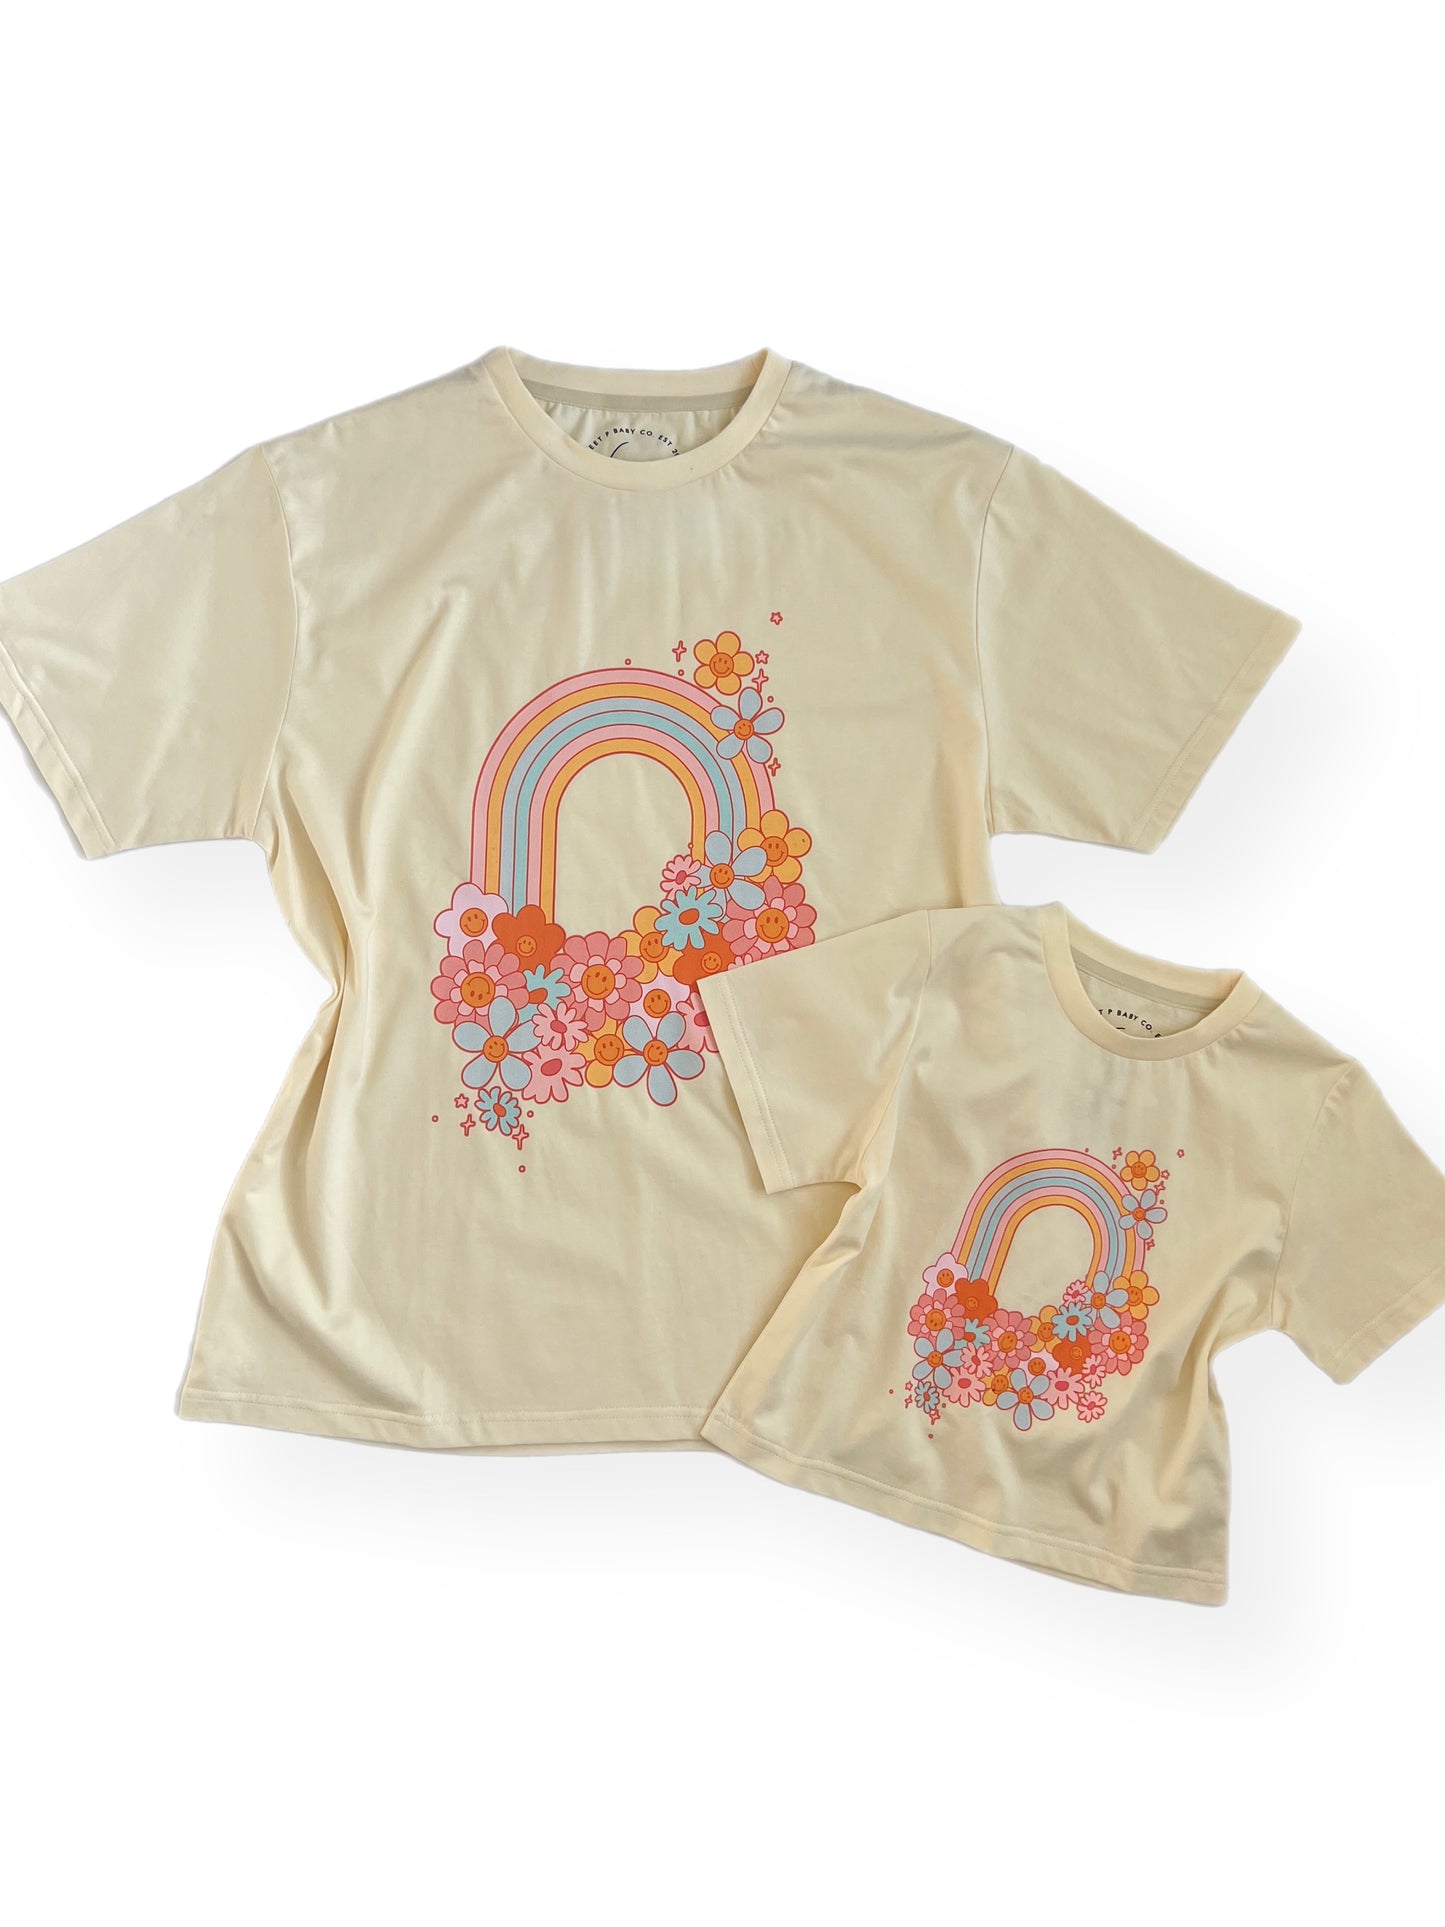 Smiley Rainbows Toddler & Kids T Shirt